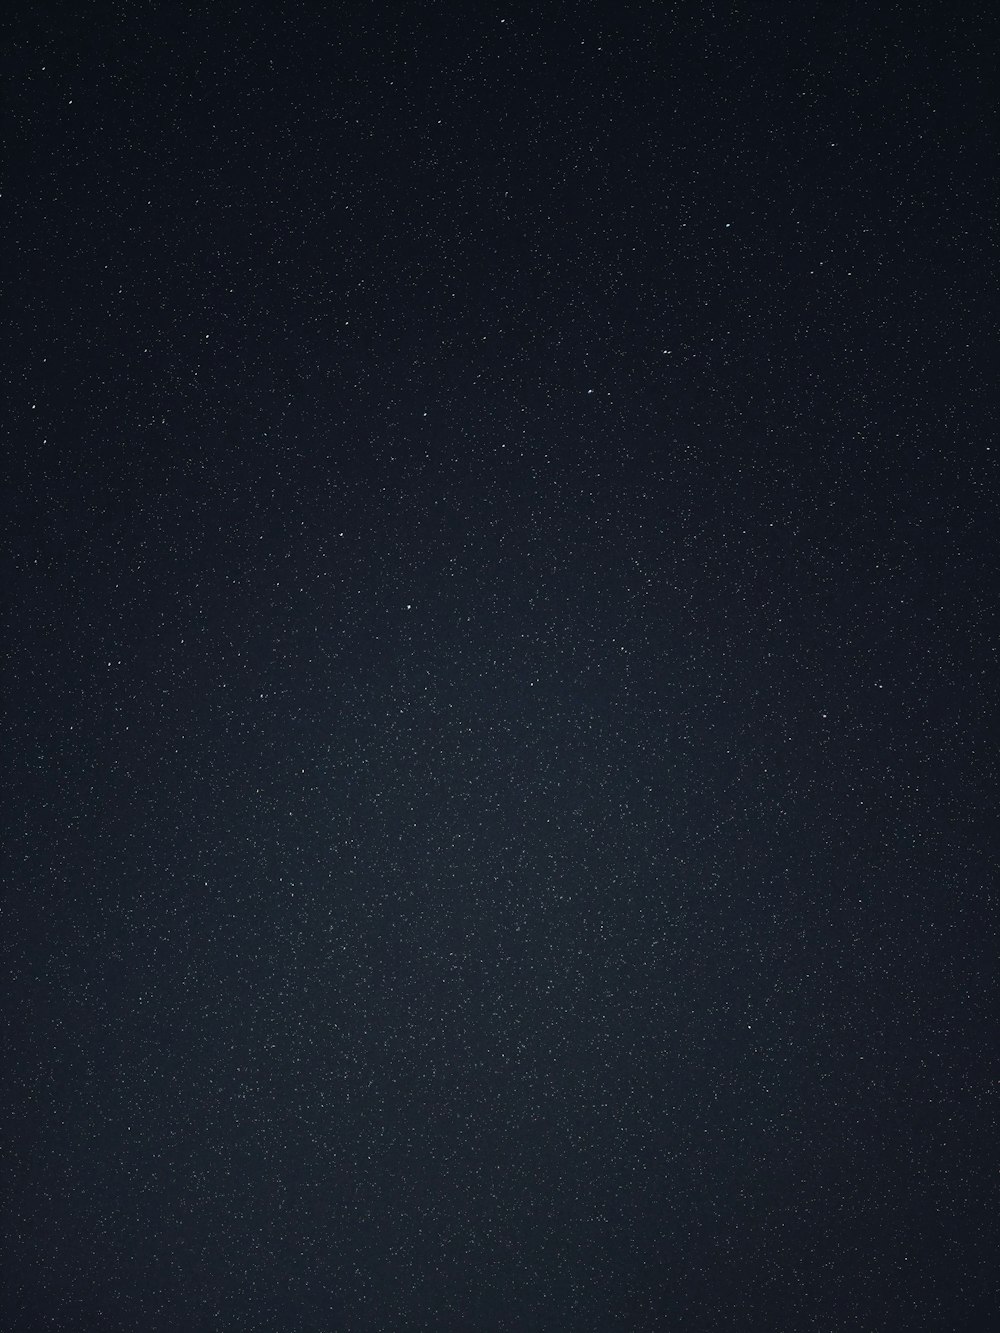 a night sky with a few stars in it